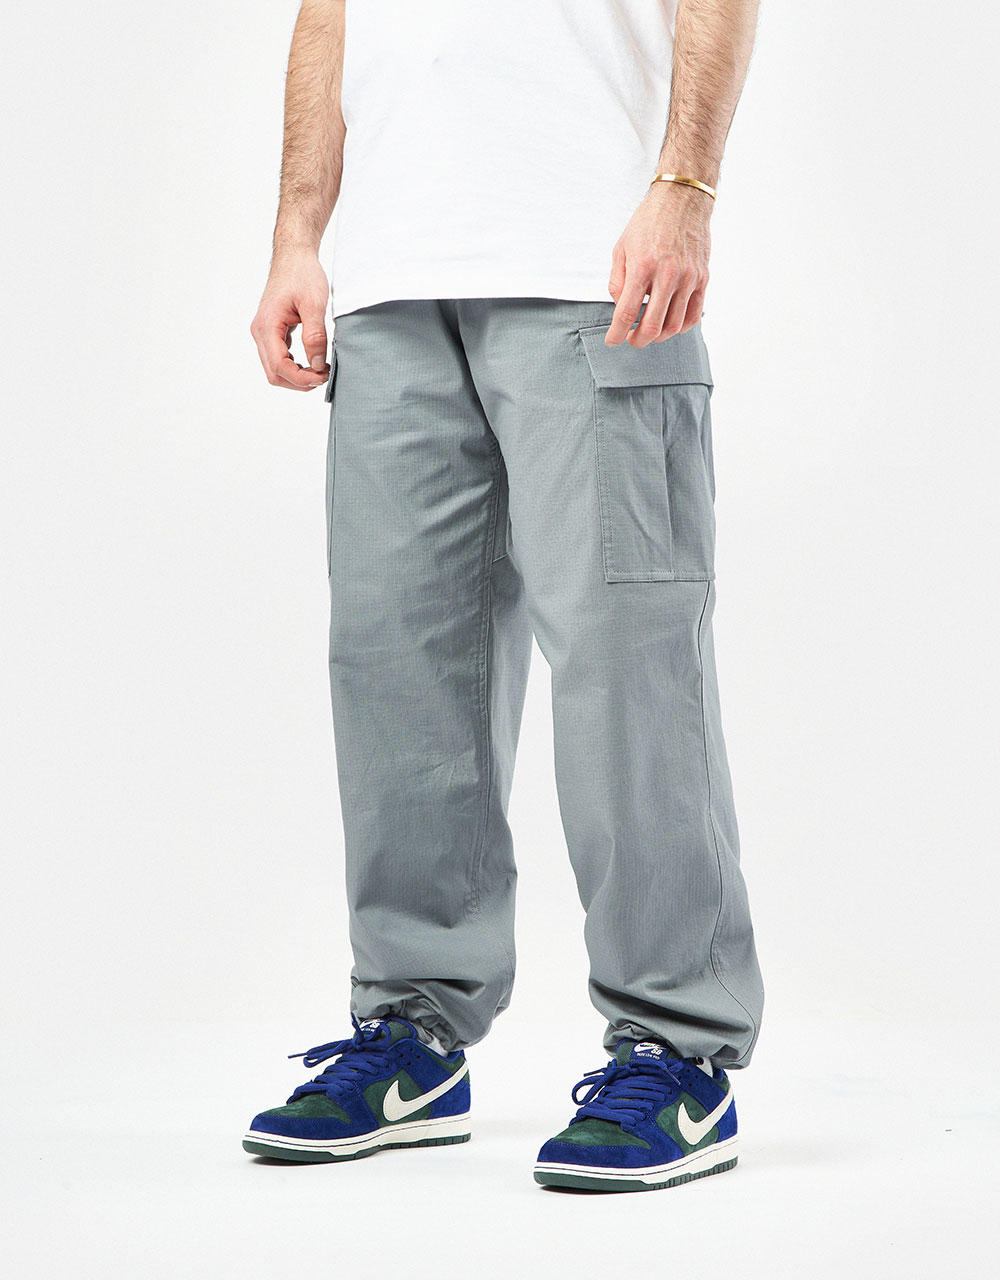 Nike SB Kearny Cargo Pant - Smoke Grey